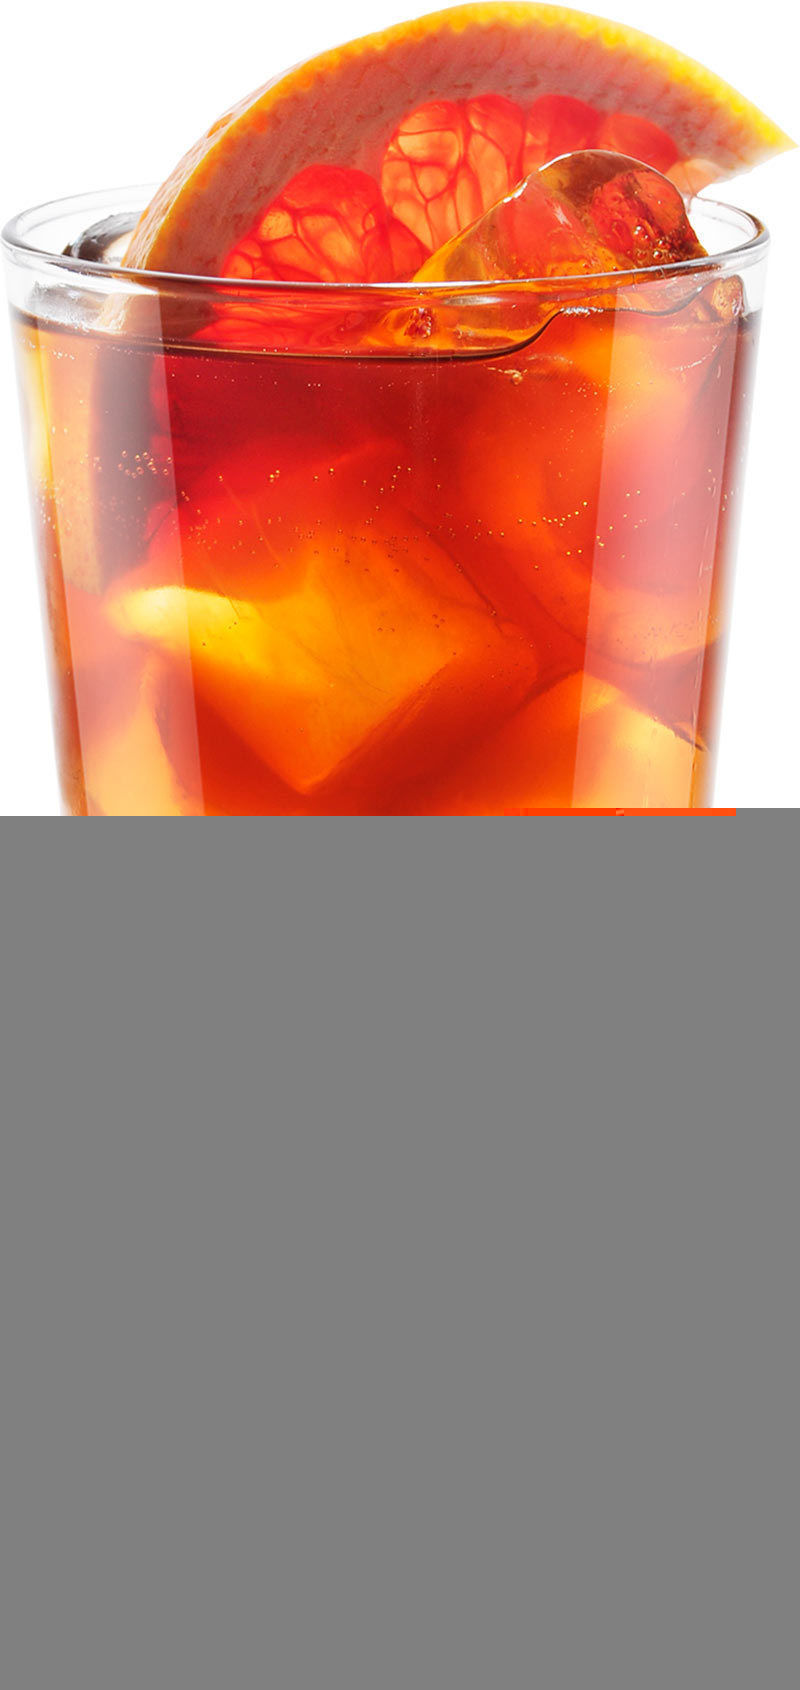 Файл:Кола и грейпфрутовый ликер (коктейль).jpg